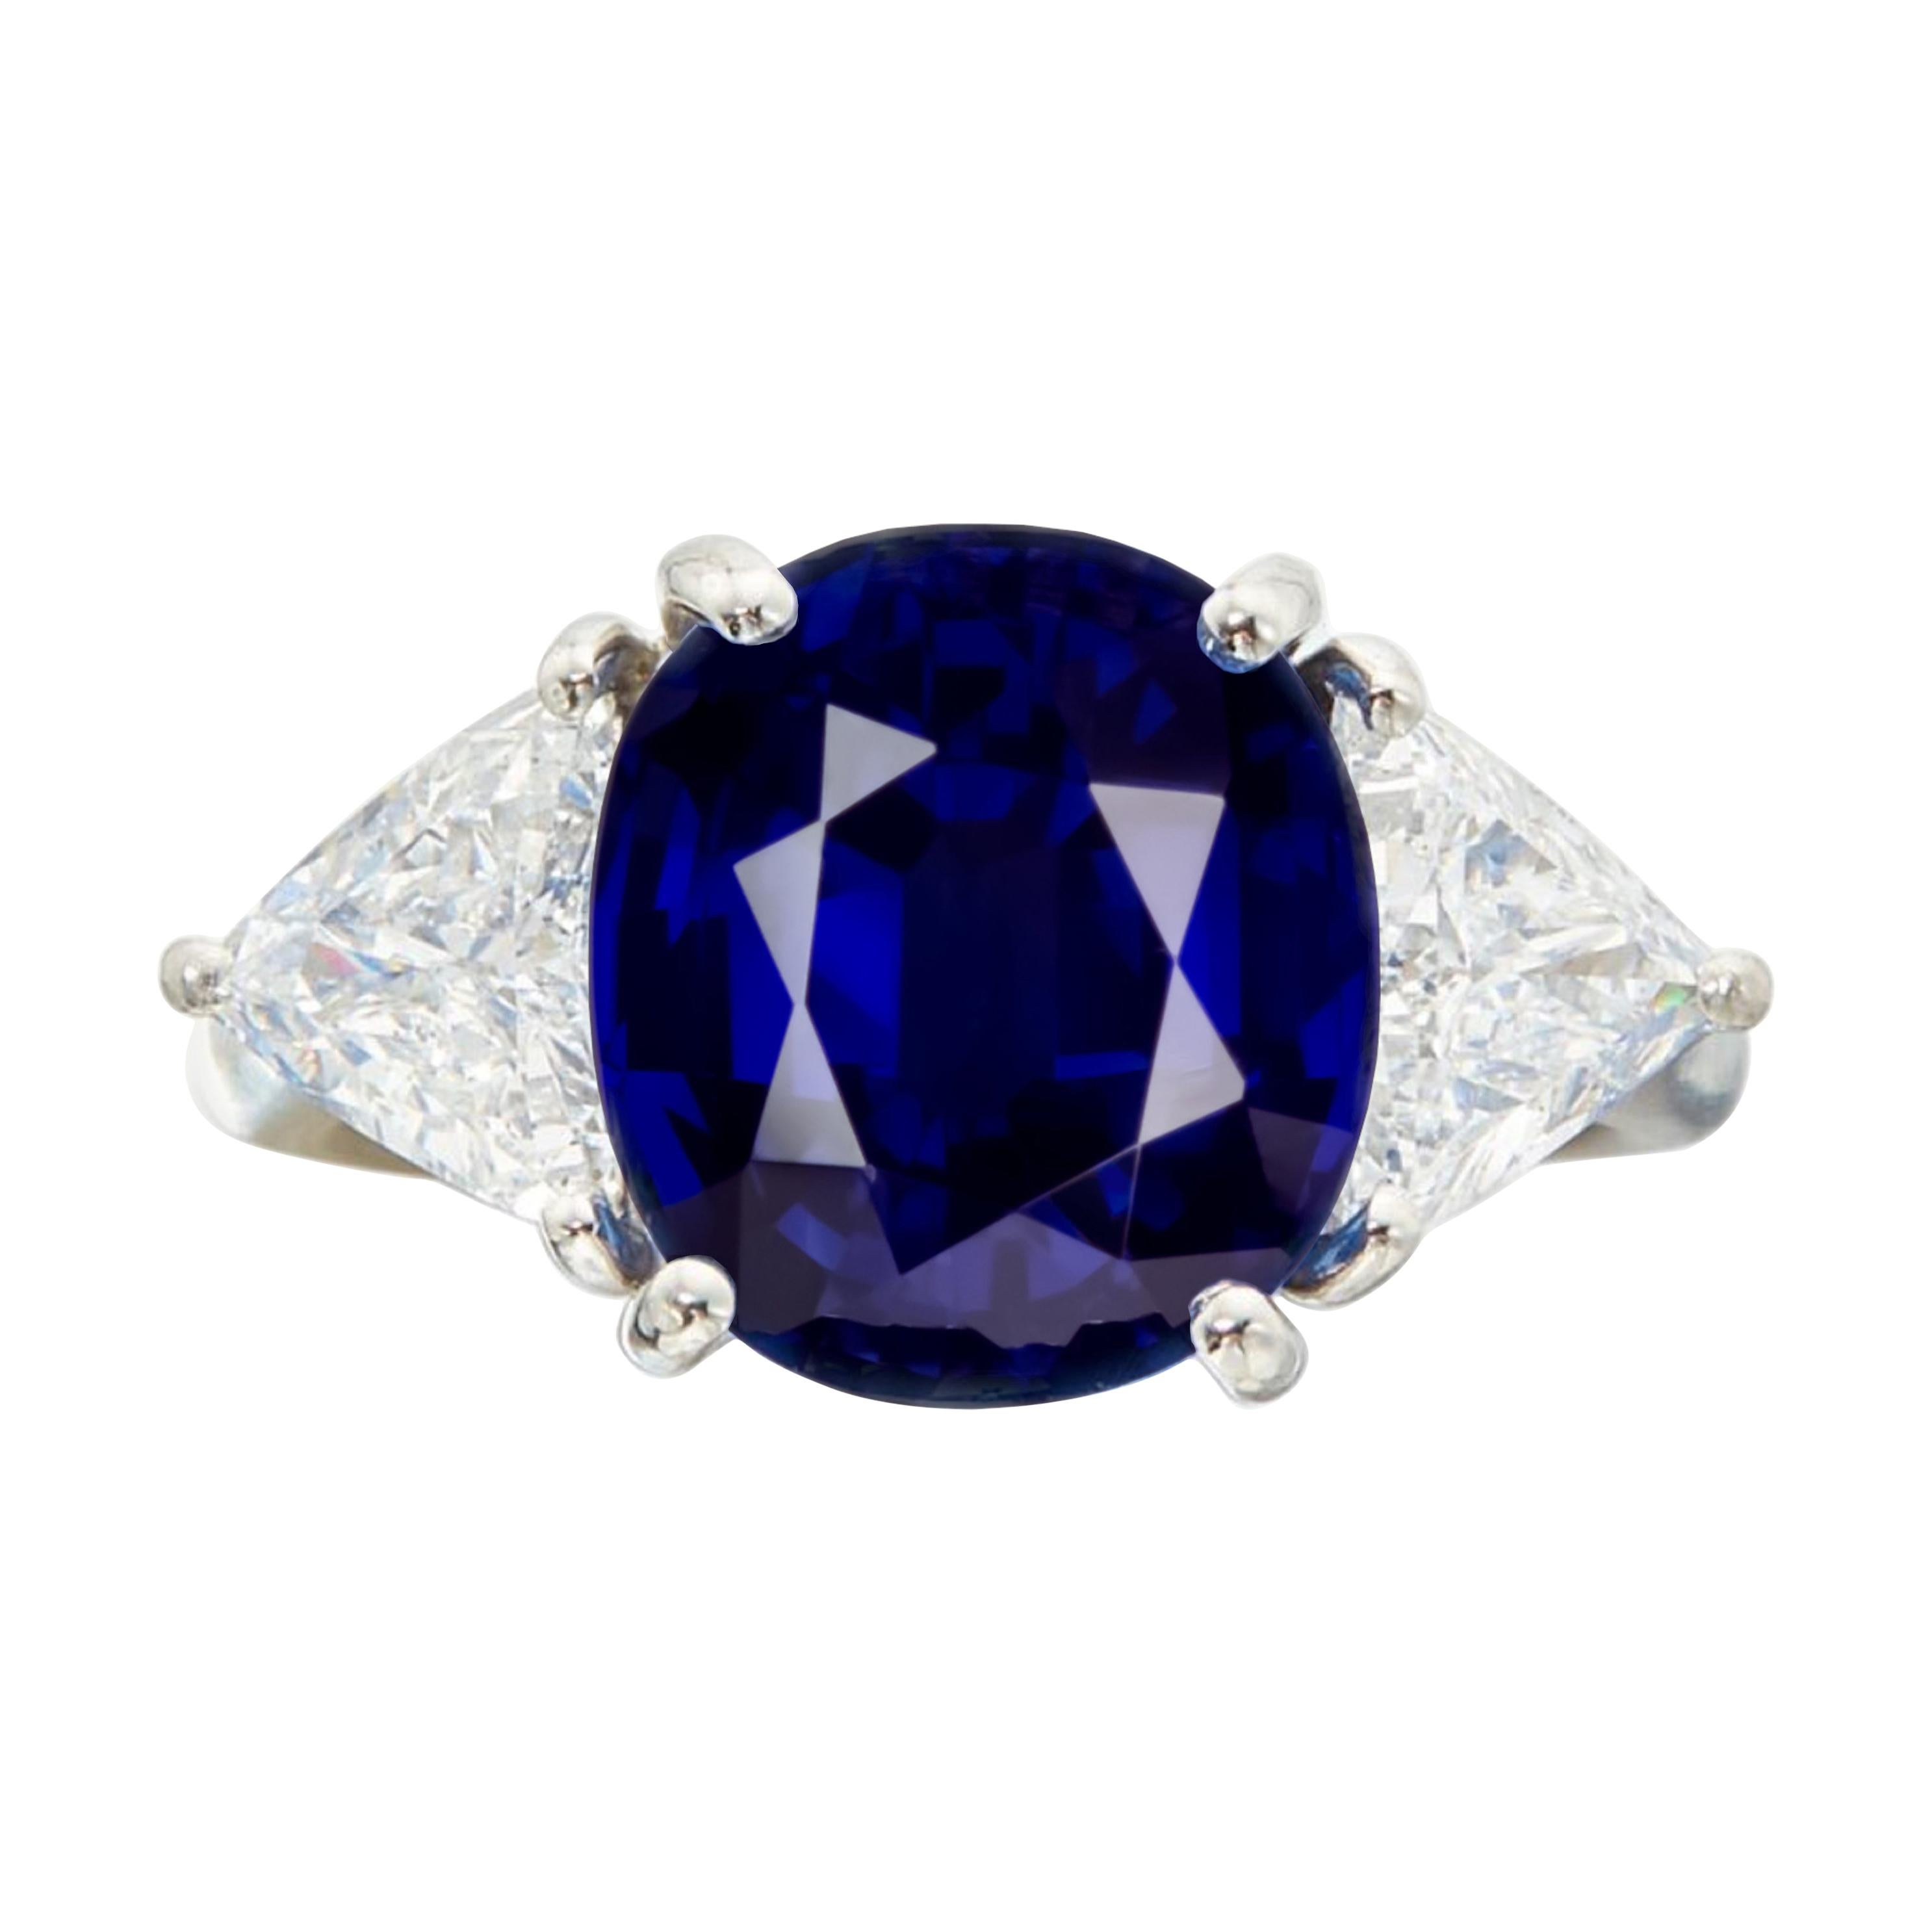 GRS Certifed 2.70 Carat Vivid Blue No Heated Sapphire Diamond Three Stone Ring